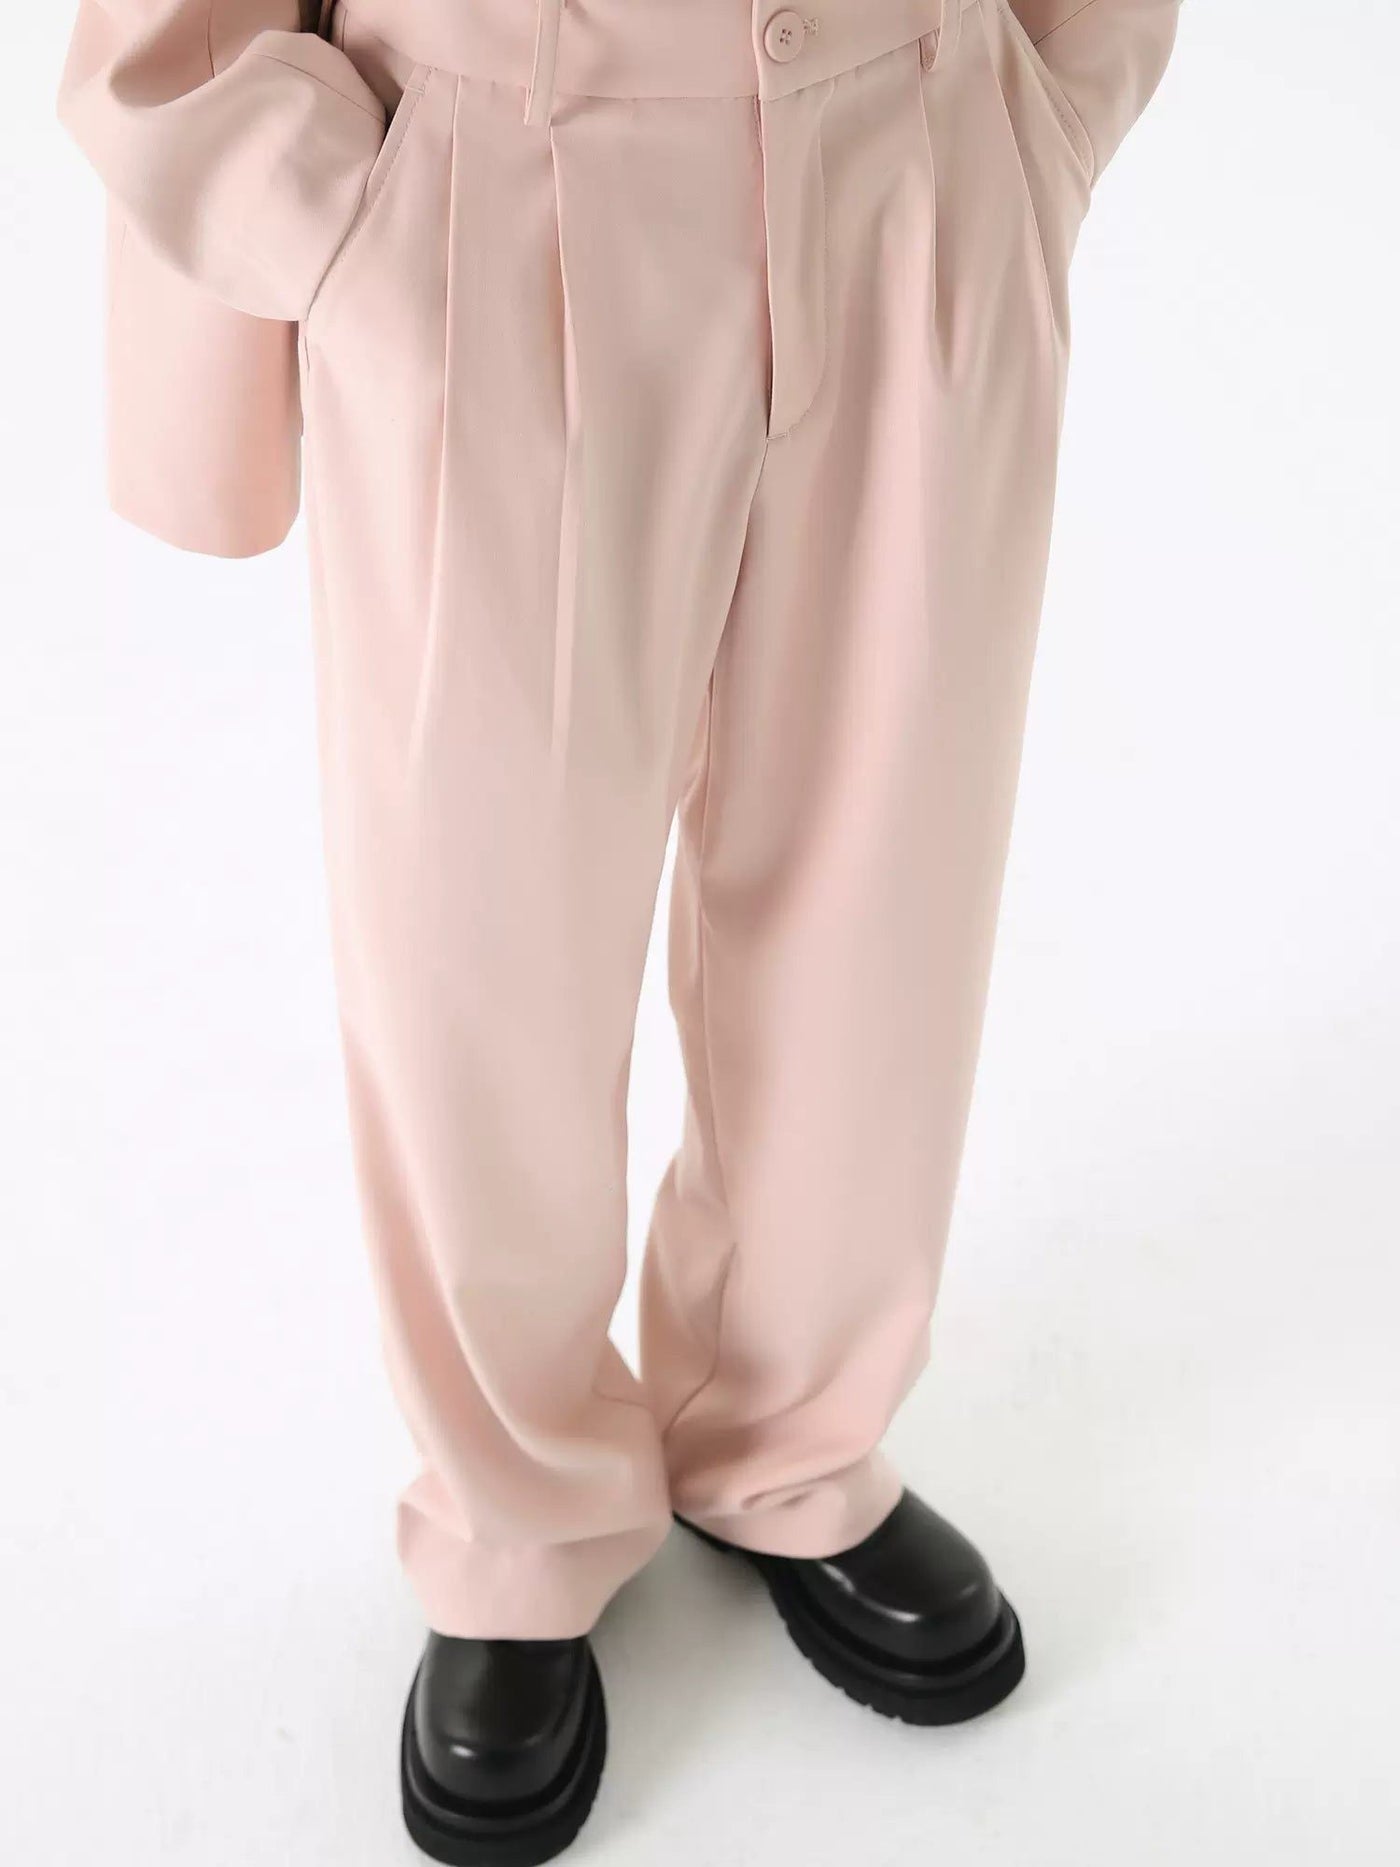 Buttoned Suit Classic Pants Korean Street Fashion Pants By HARH Shop Online at OH Vault